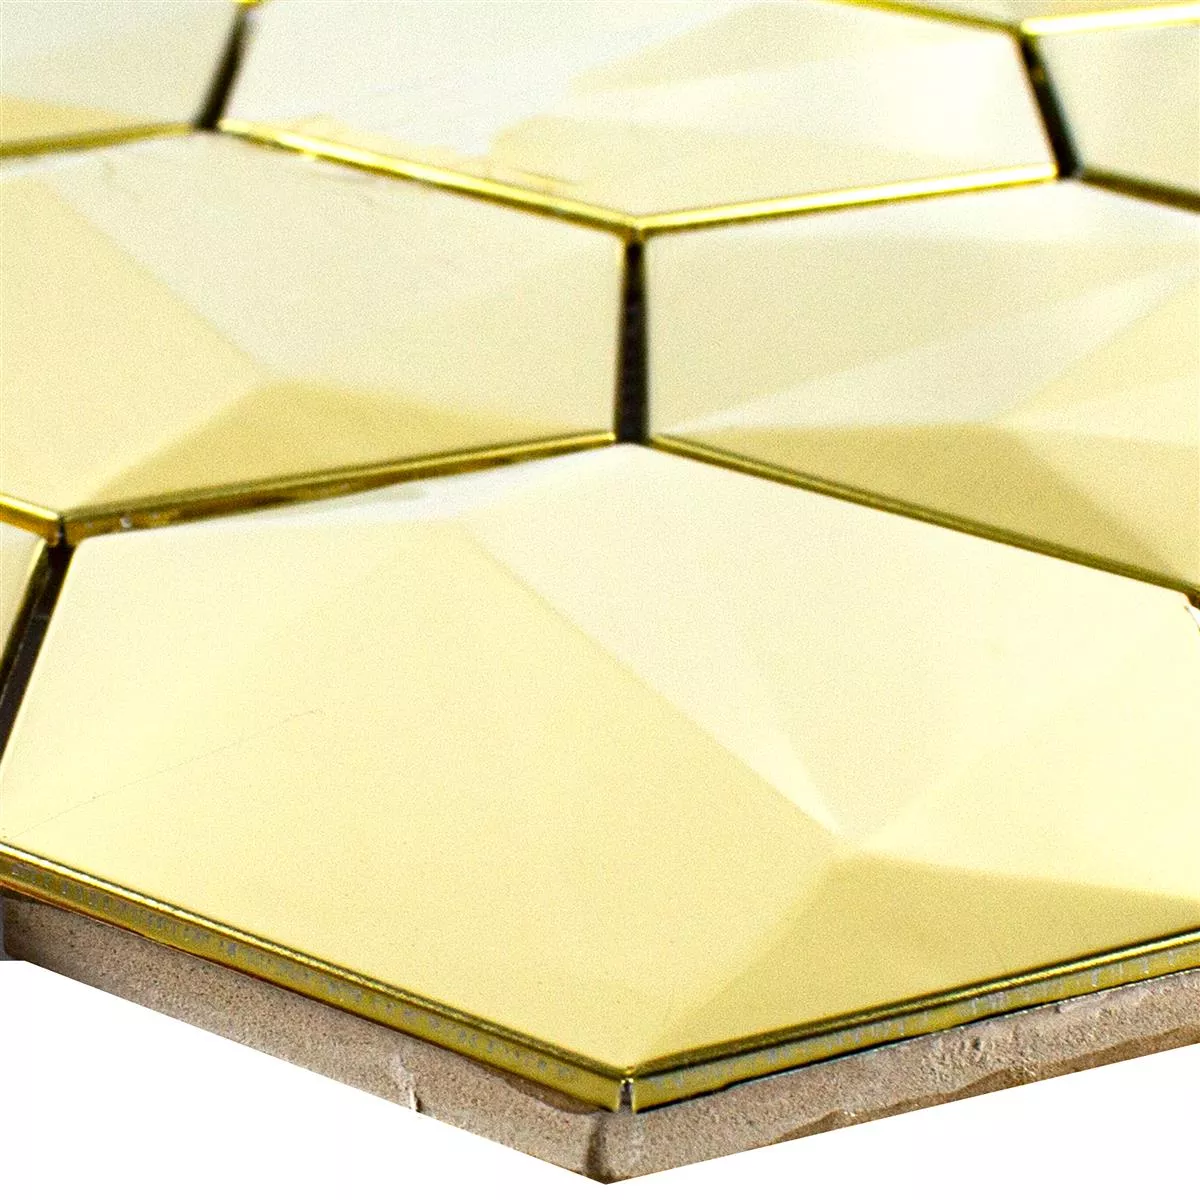 Sample Stainless Steel Mosaic Tiles Durango Hexagon 3D Gold